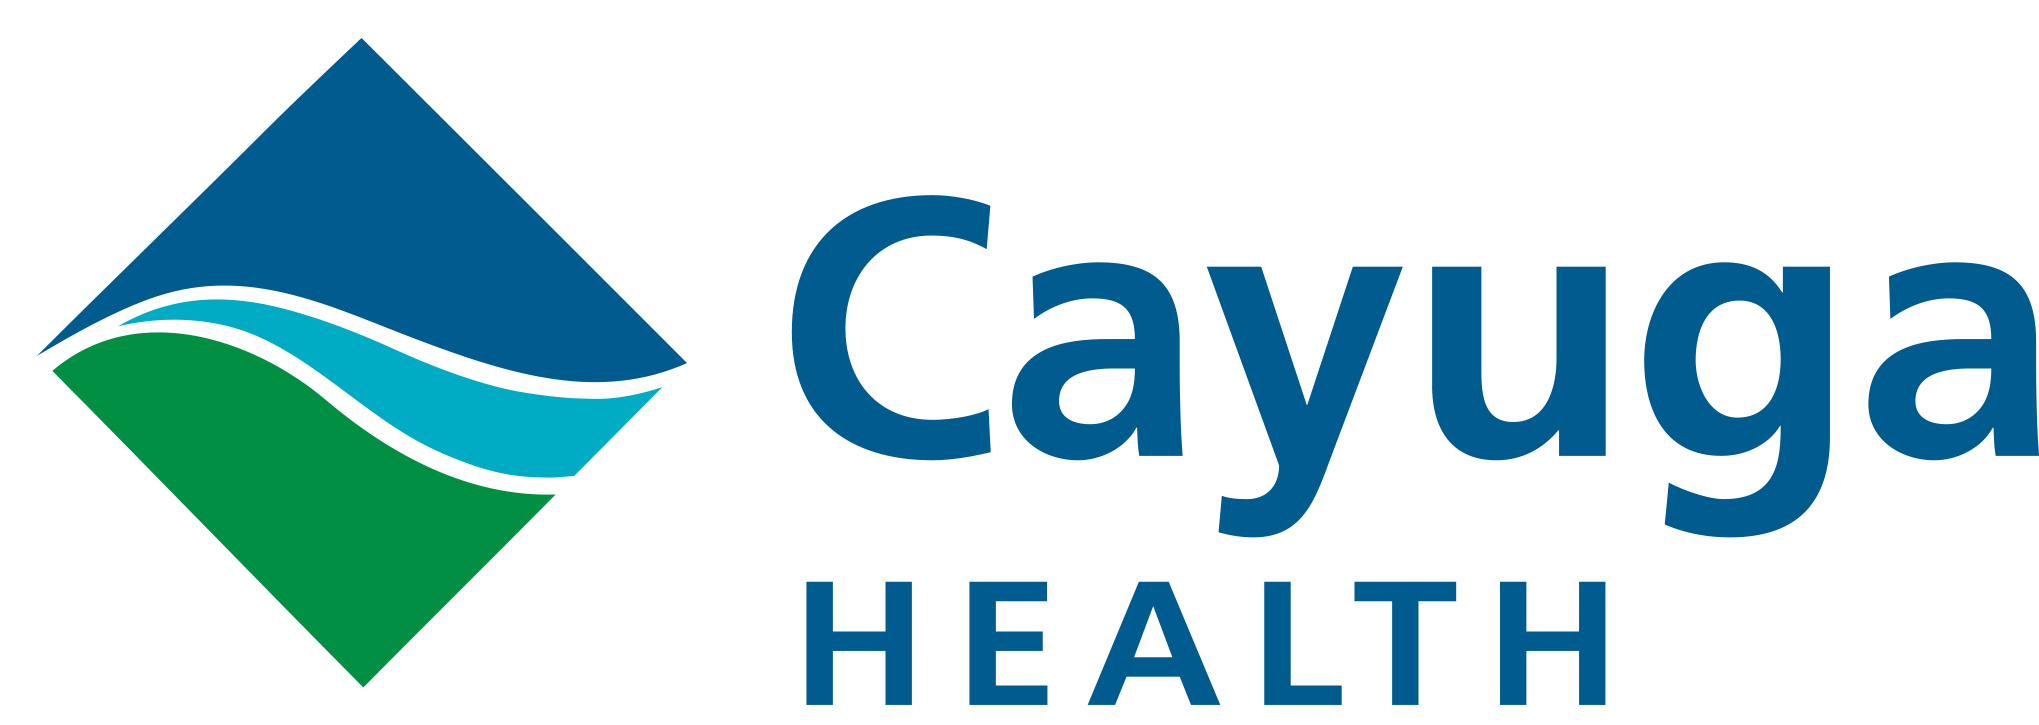 Cayuga Medical Center